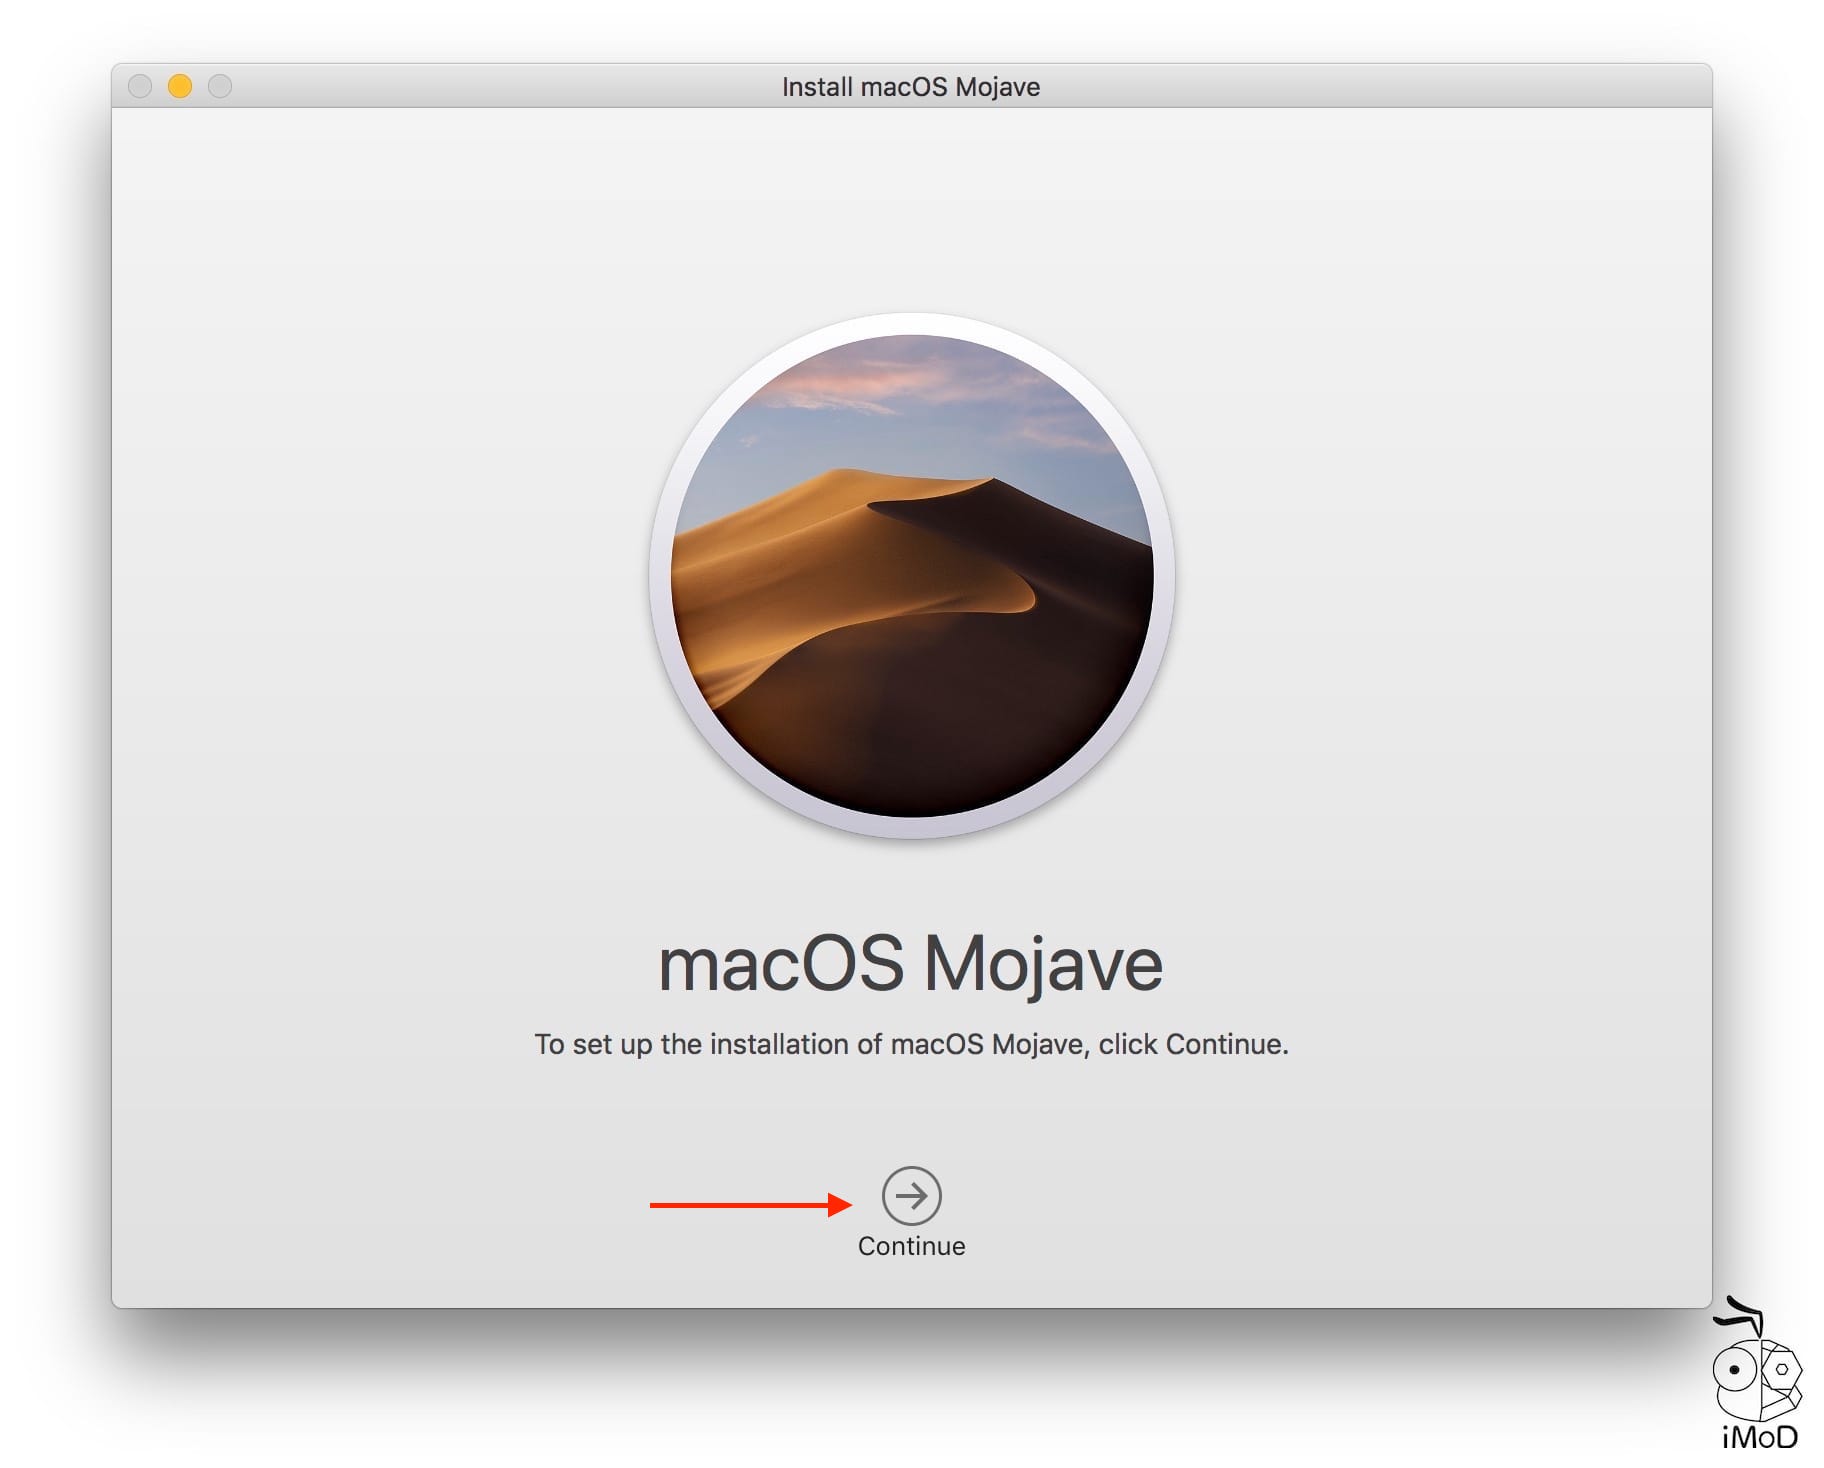 Install Macos Mojave Screenshot 2018 10 01 09.58.48